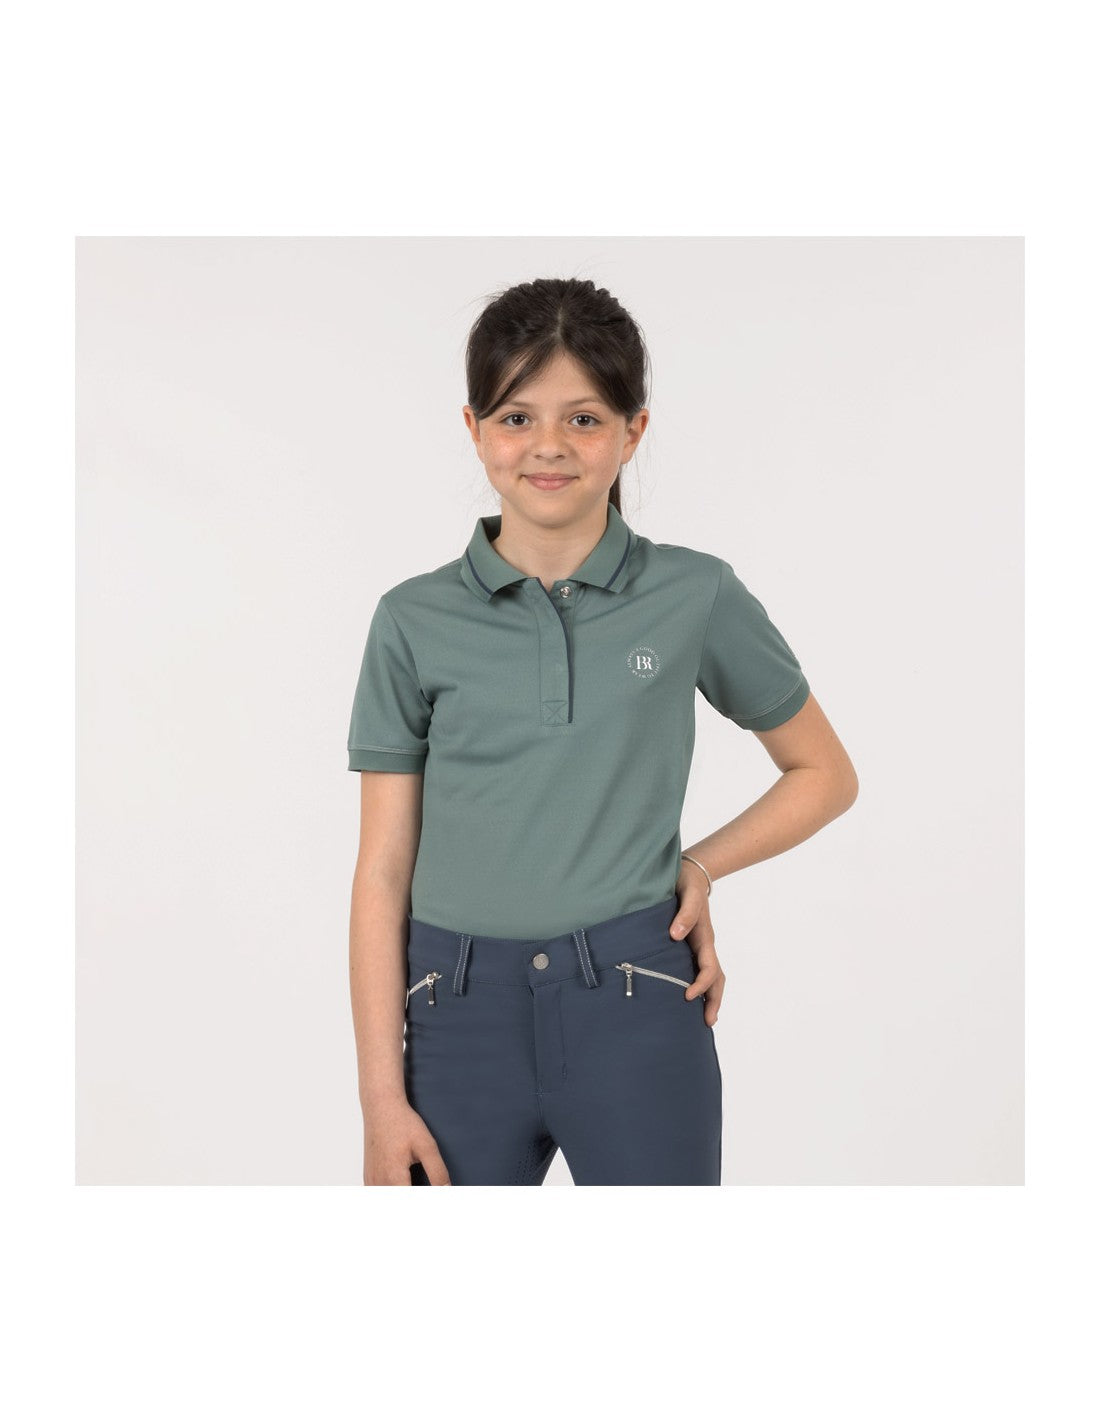 BR 4-EH Chelsy Children's Polo Shirt - North Atlantic